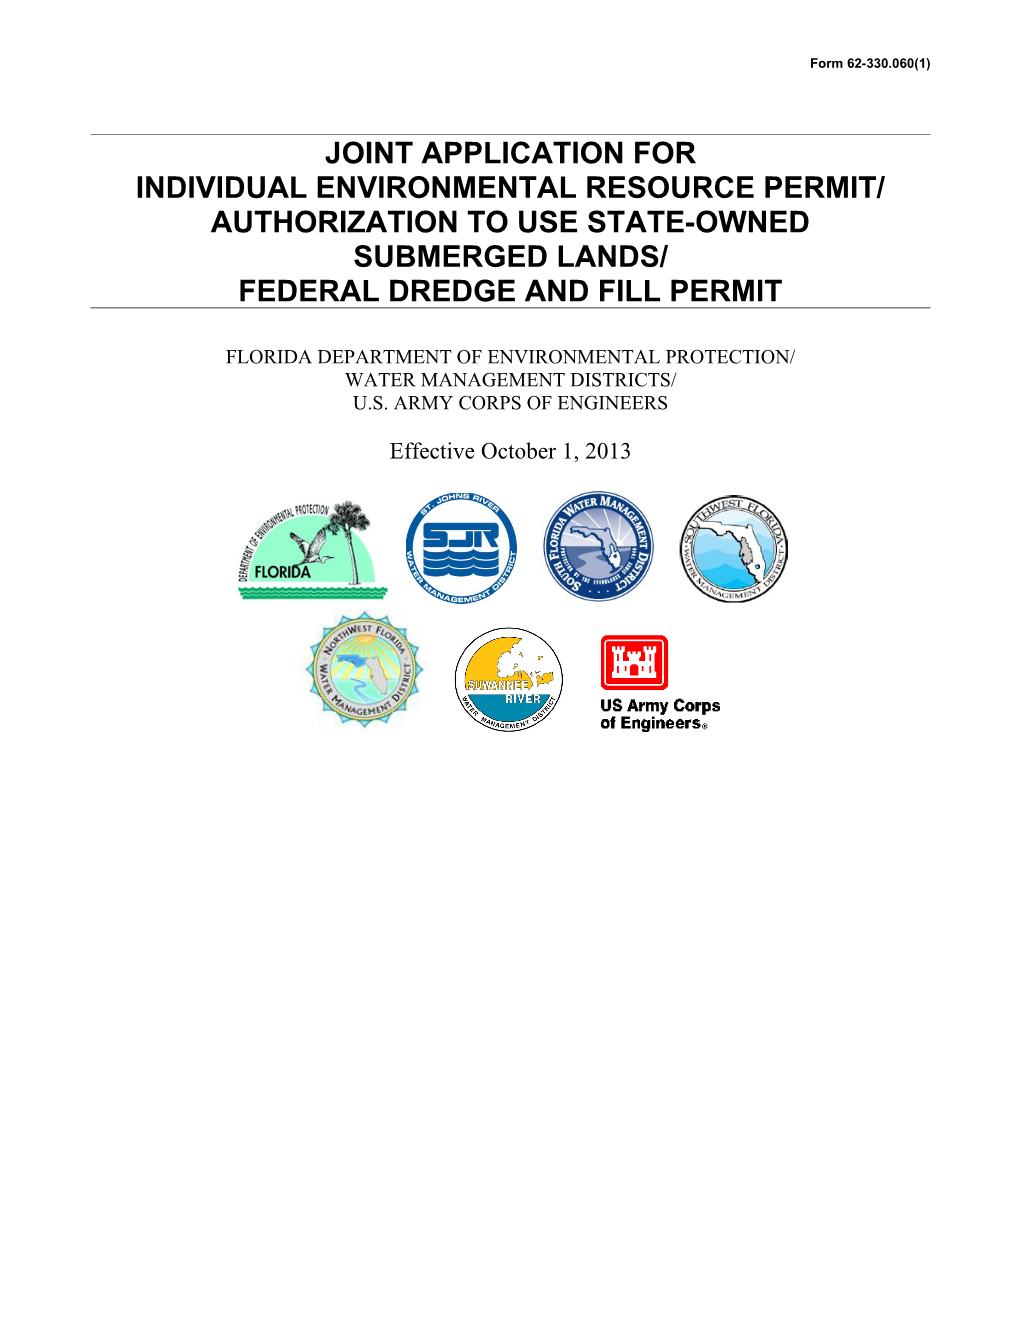 Individual Environmental Resource Permit